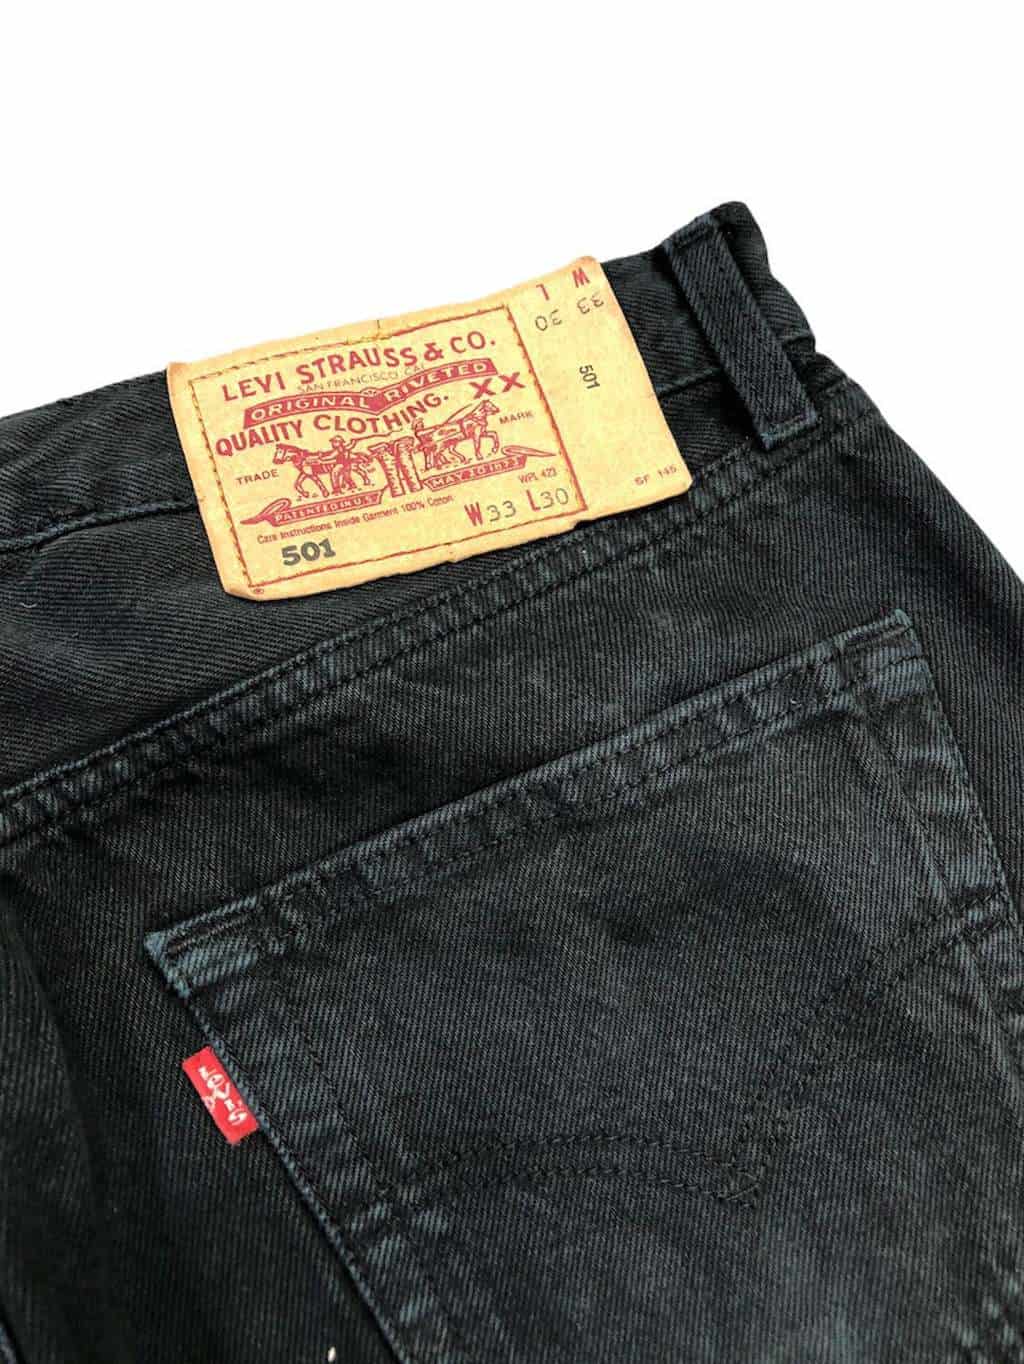 90s vintage Levis 501 jeans in black-grey, grunge denim - W31 x L30 - St  Cyr Vintage